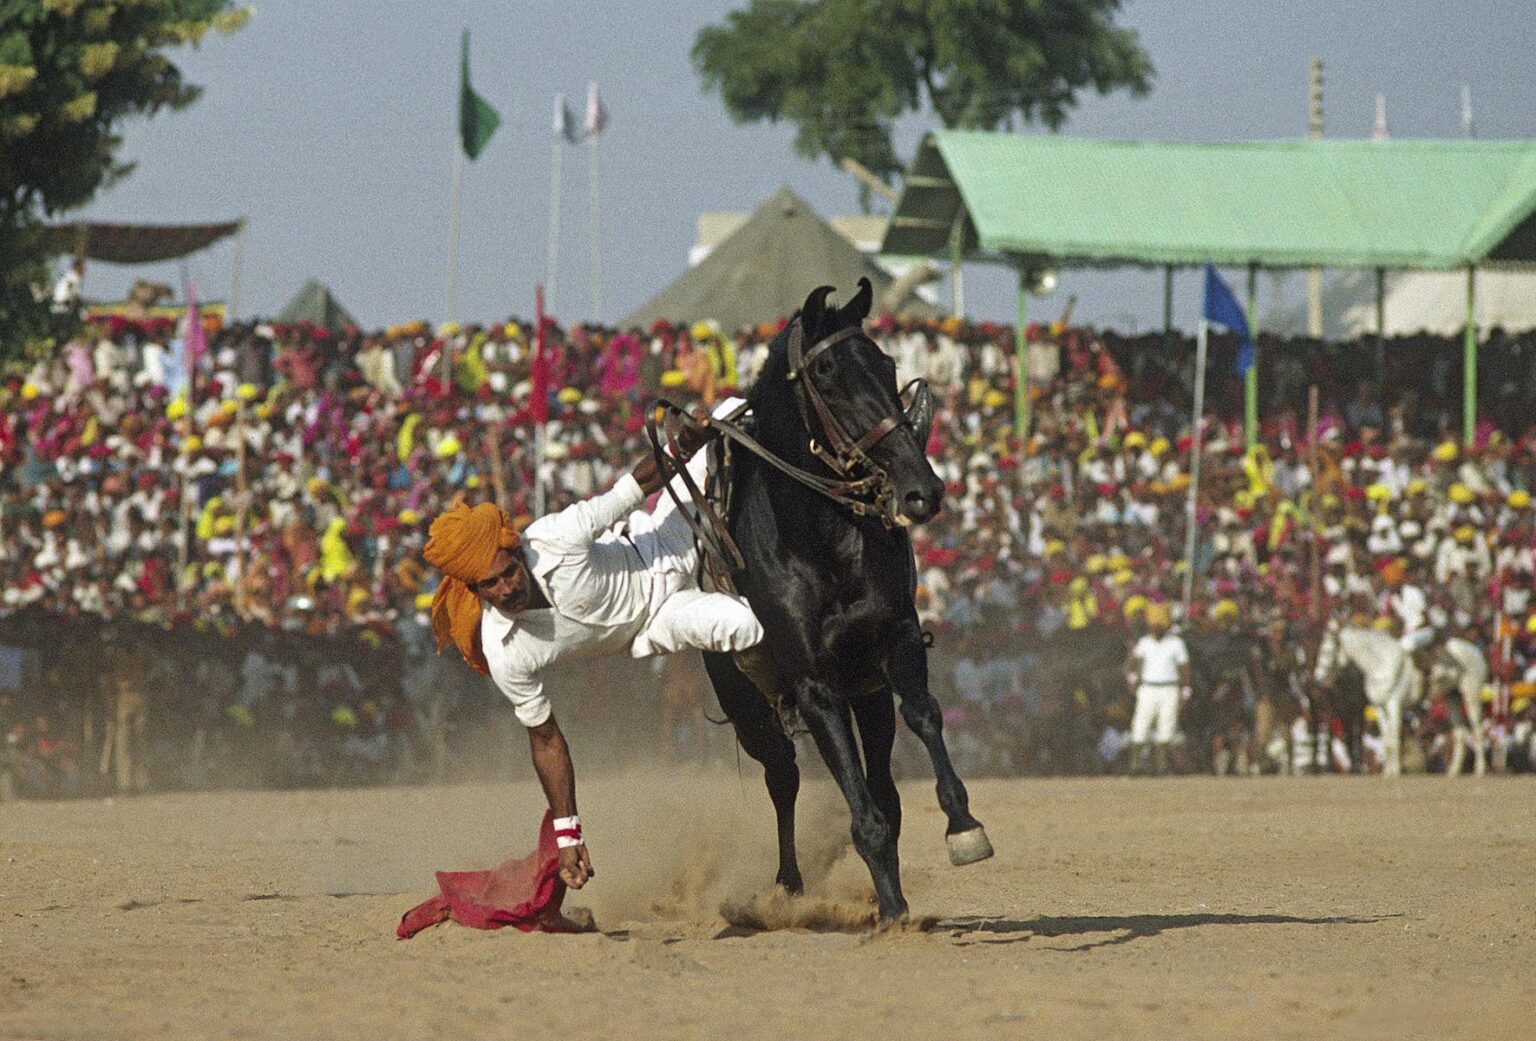 A RAJASTHANI RIDER and his HORSE during a HORSEMANSHIP COMPETITION at the PUSHKAR CAMEL FAIR - RAJASTHAN, INDIA